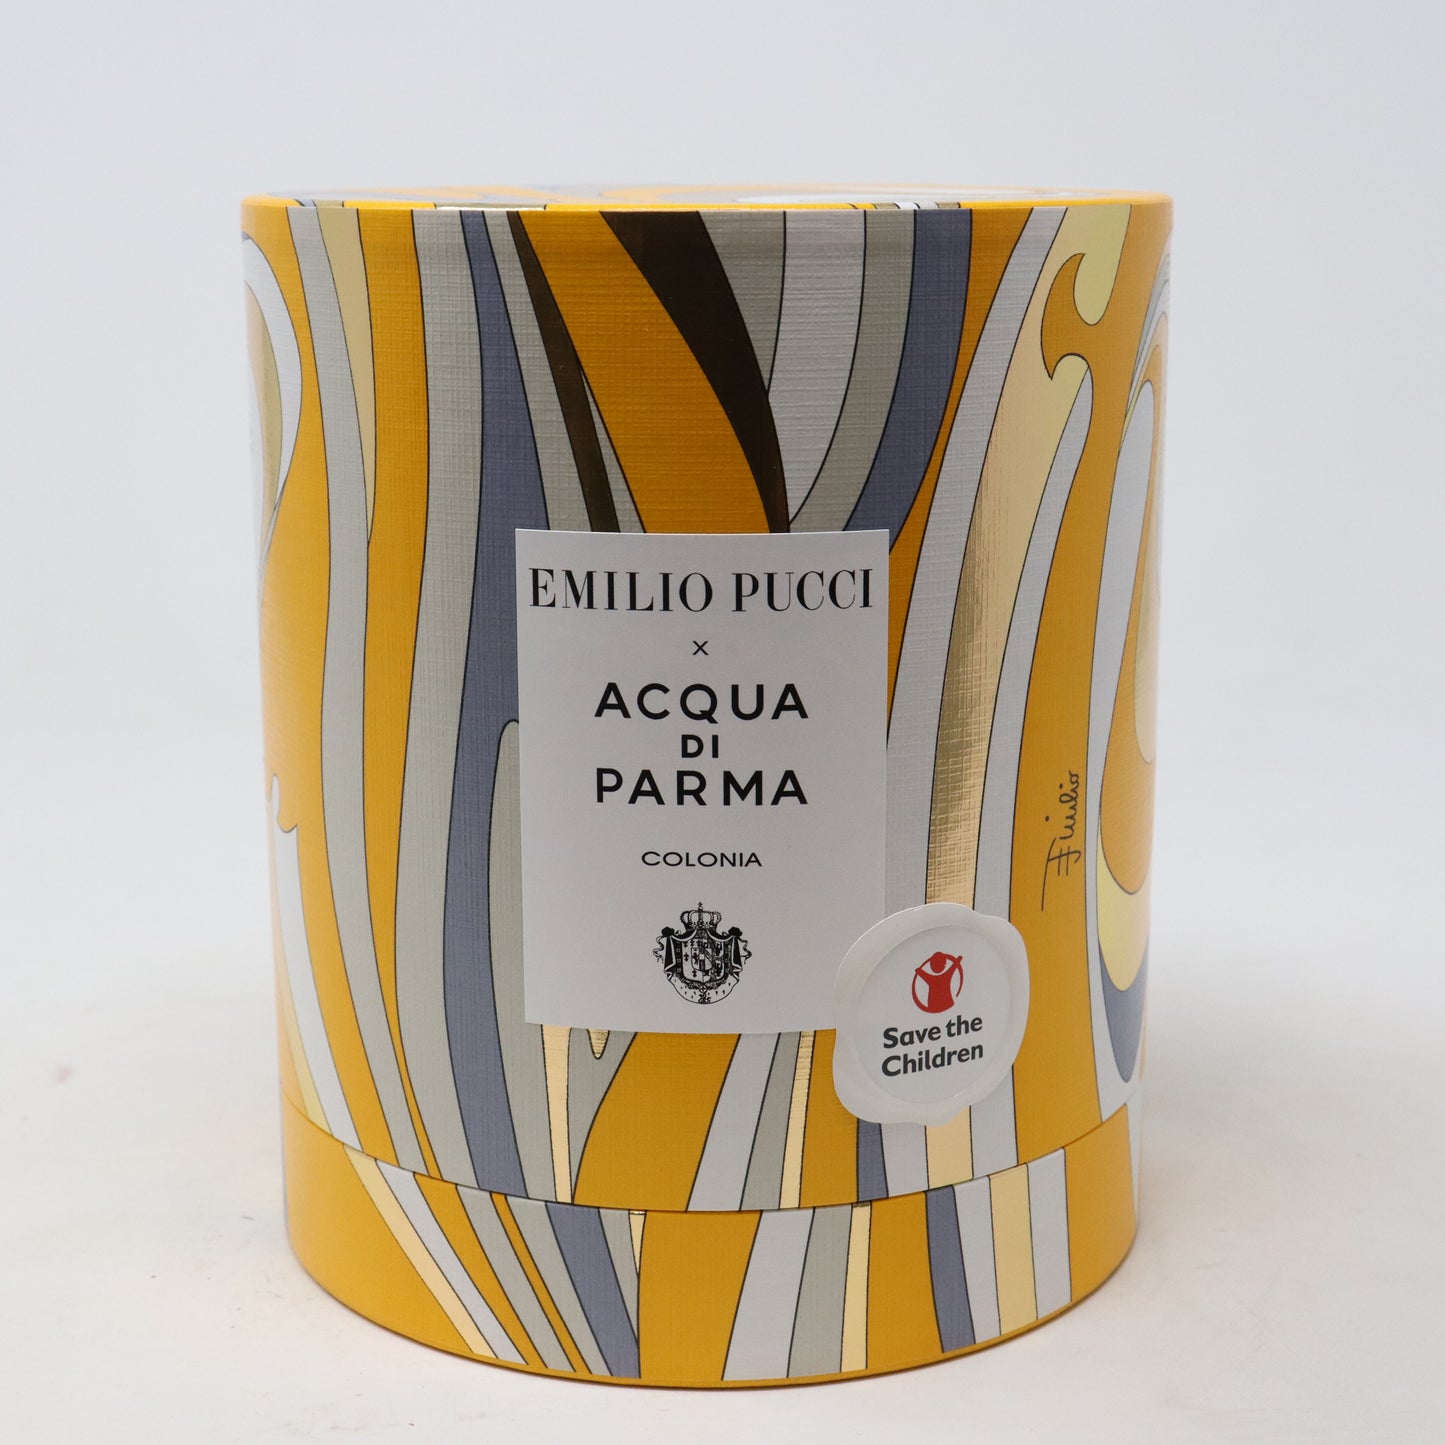 Acqua Di Parma Emilio Pucci Colonia Eau De Cologne 3-Pcs Set  / New With Box